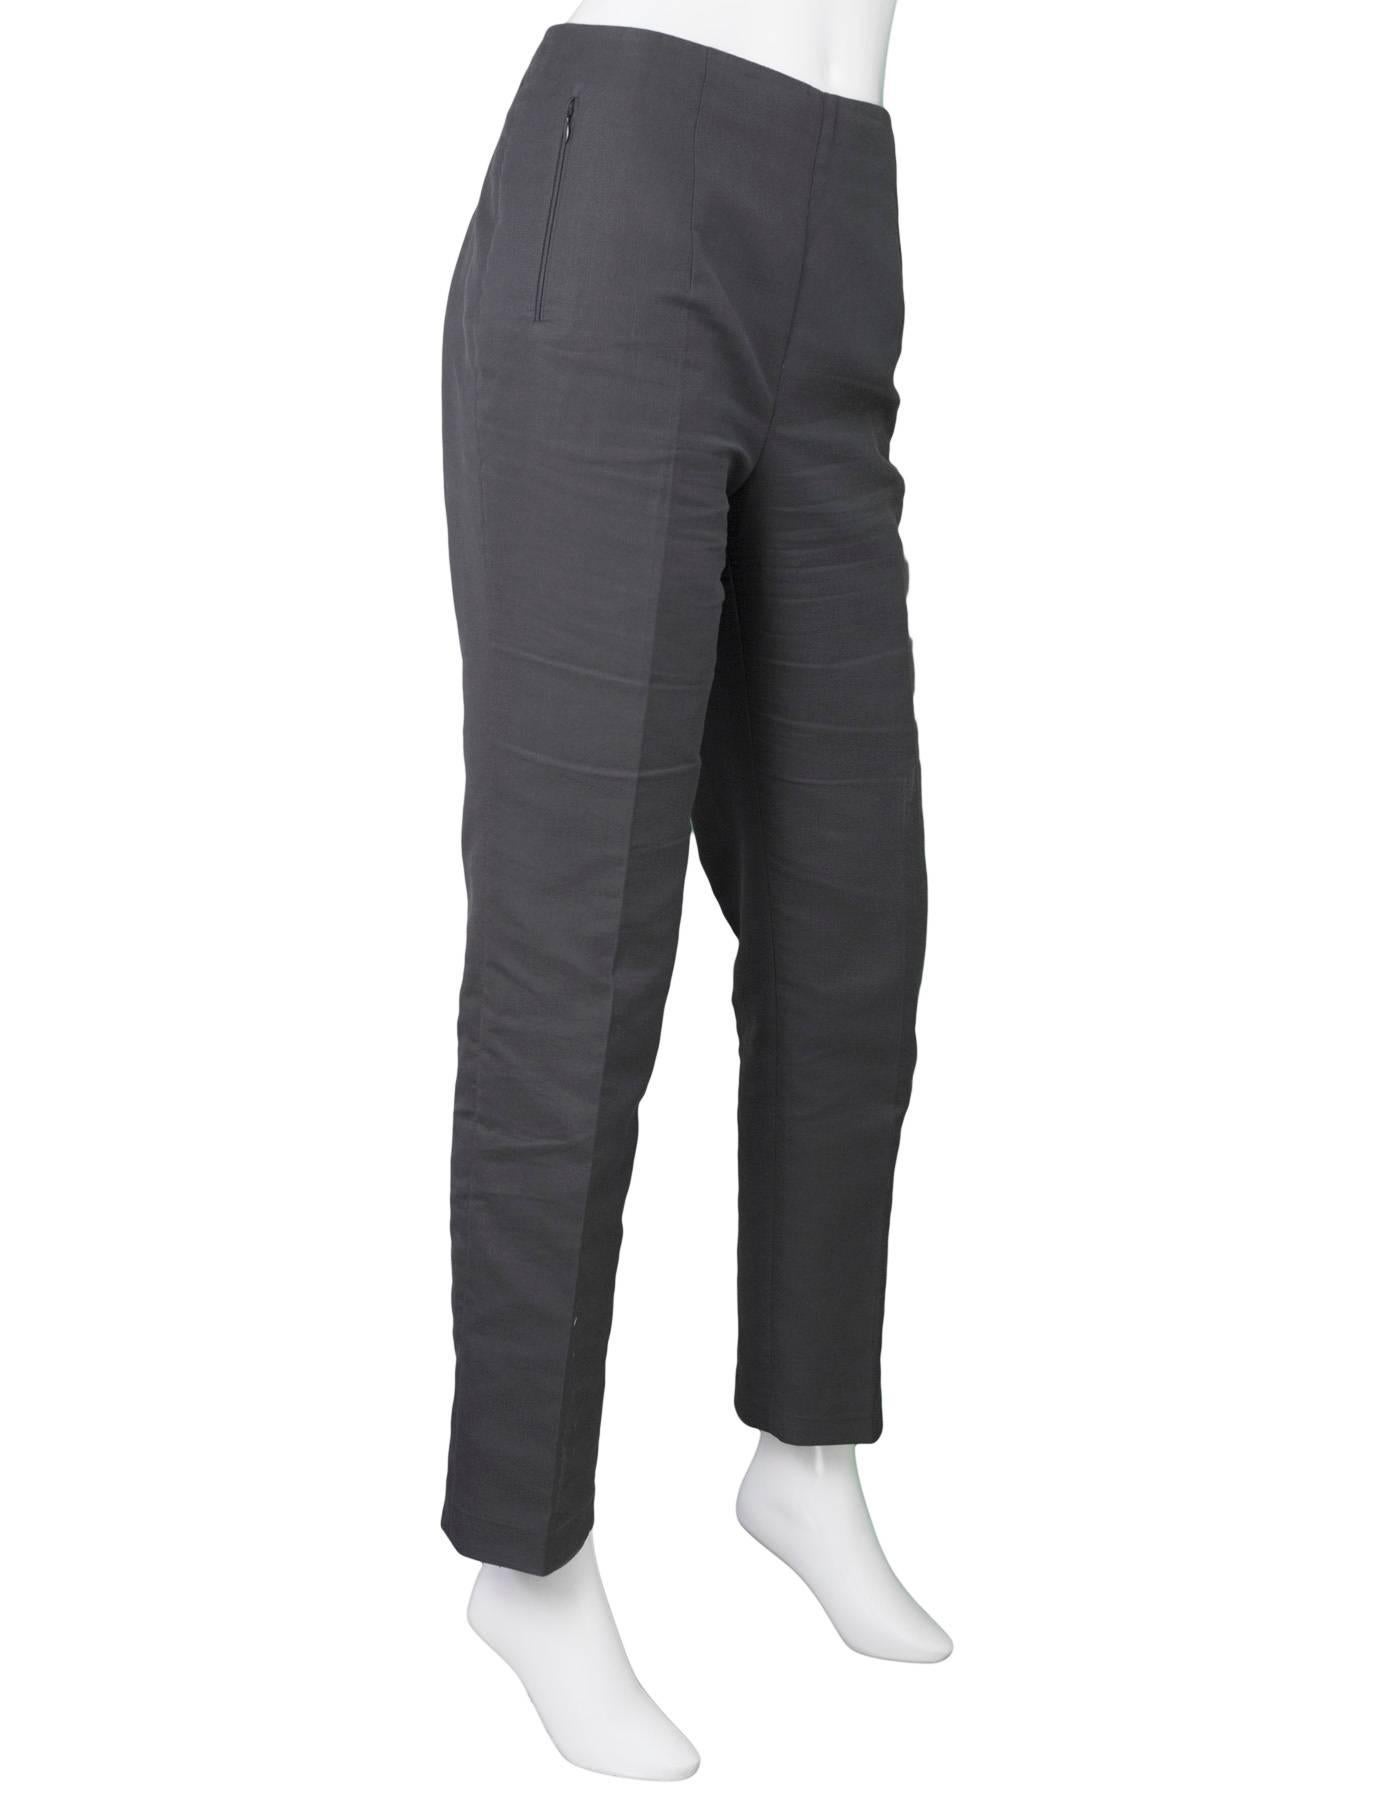 grey cropped slacks